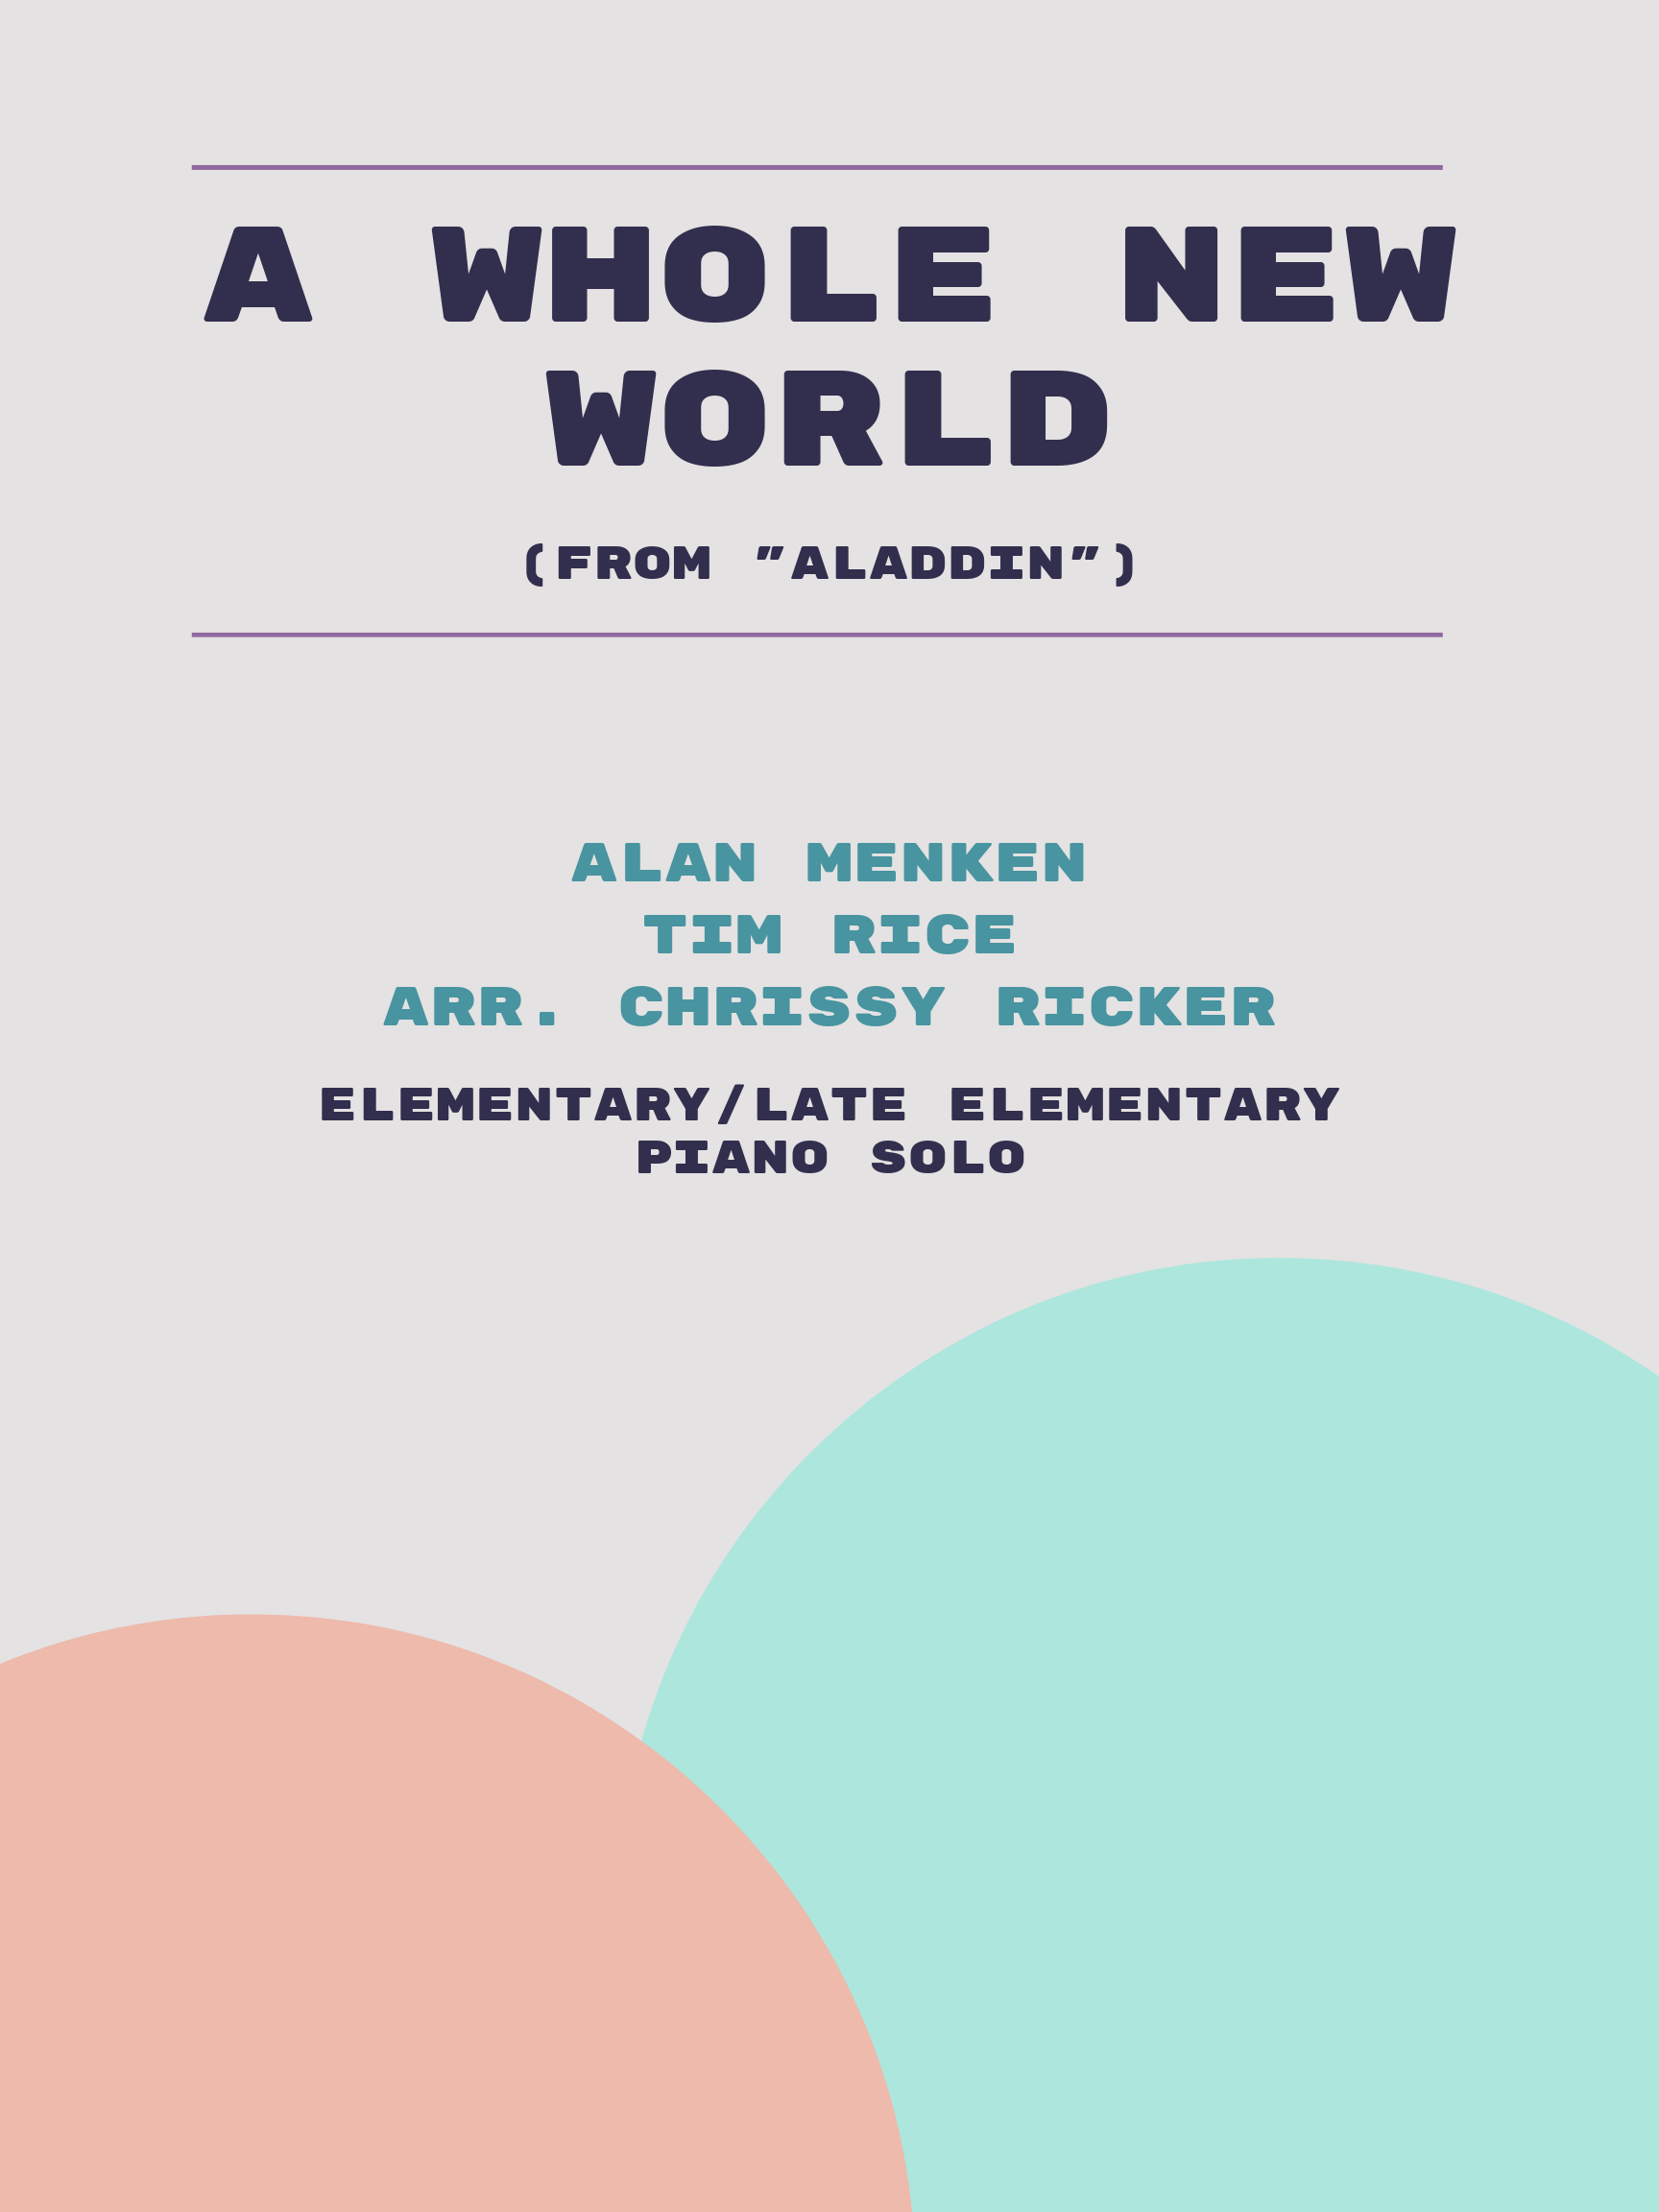 A Whole New World by Alan Menken, Tim Rice